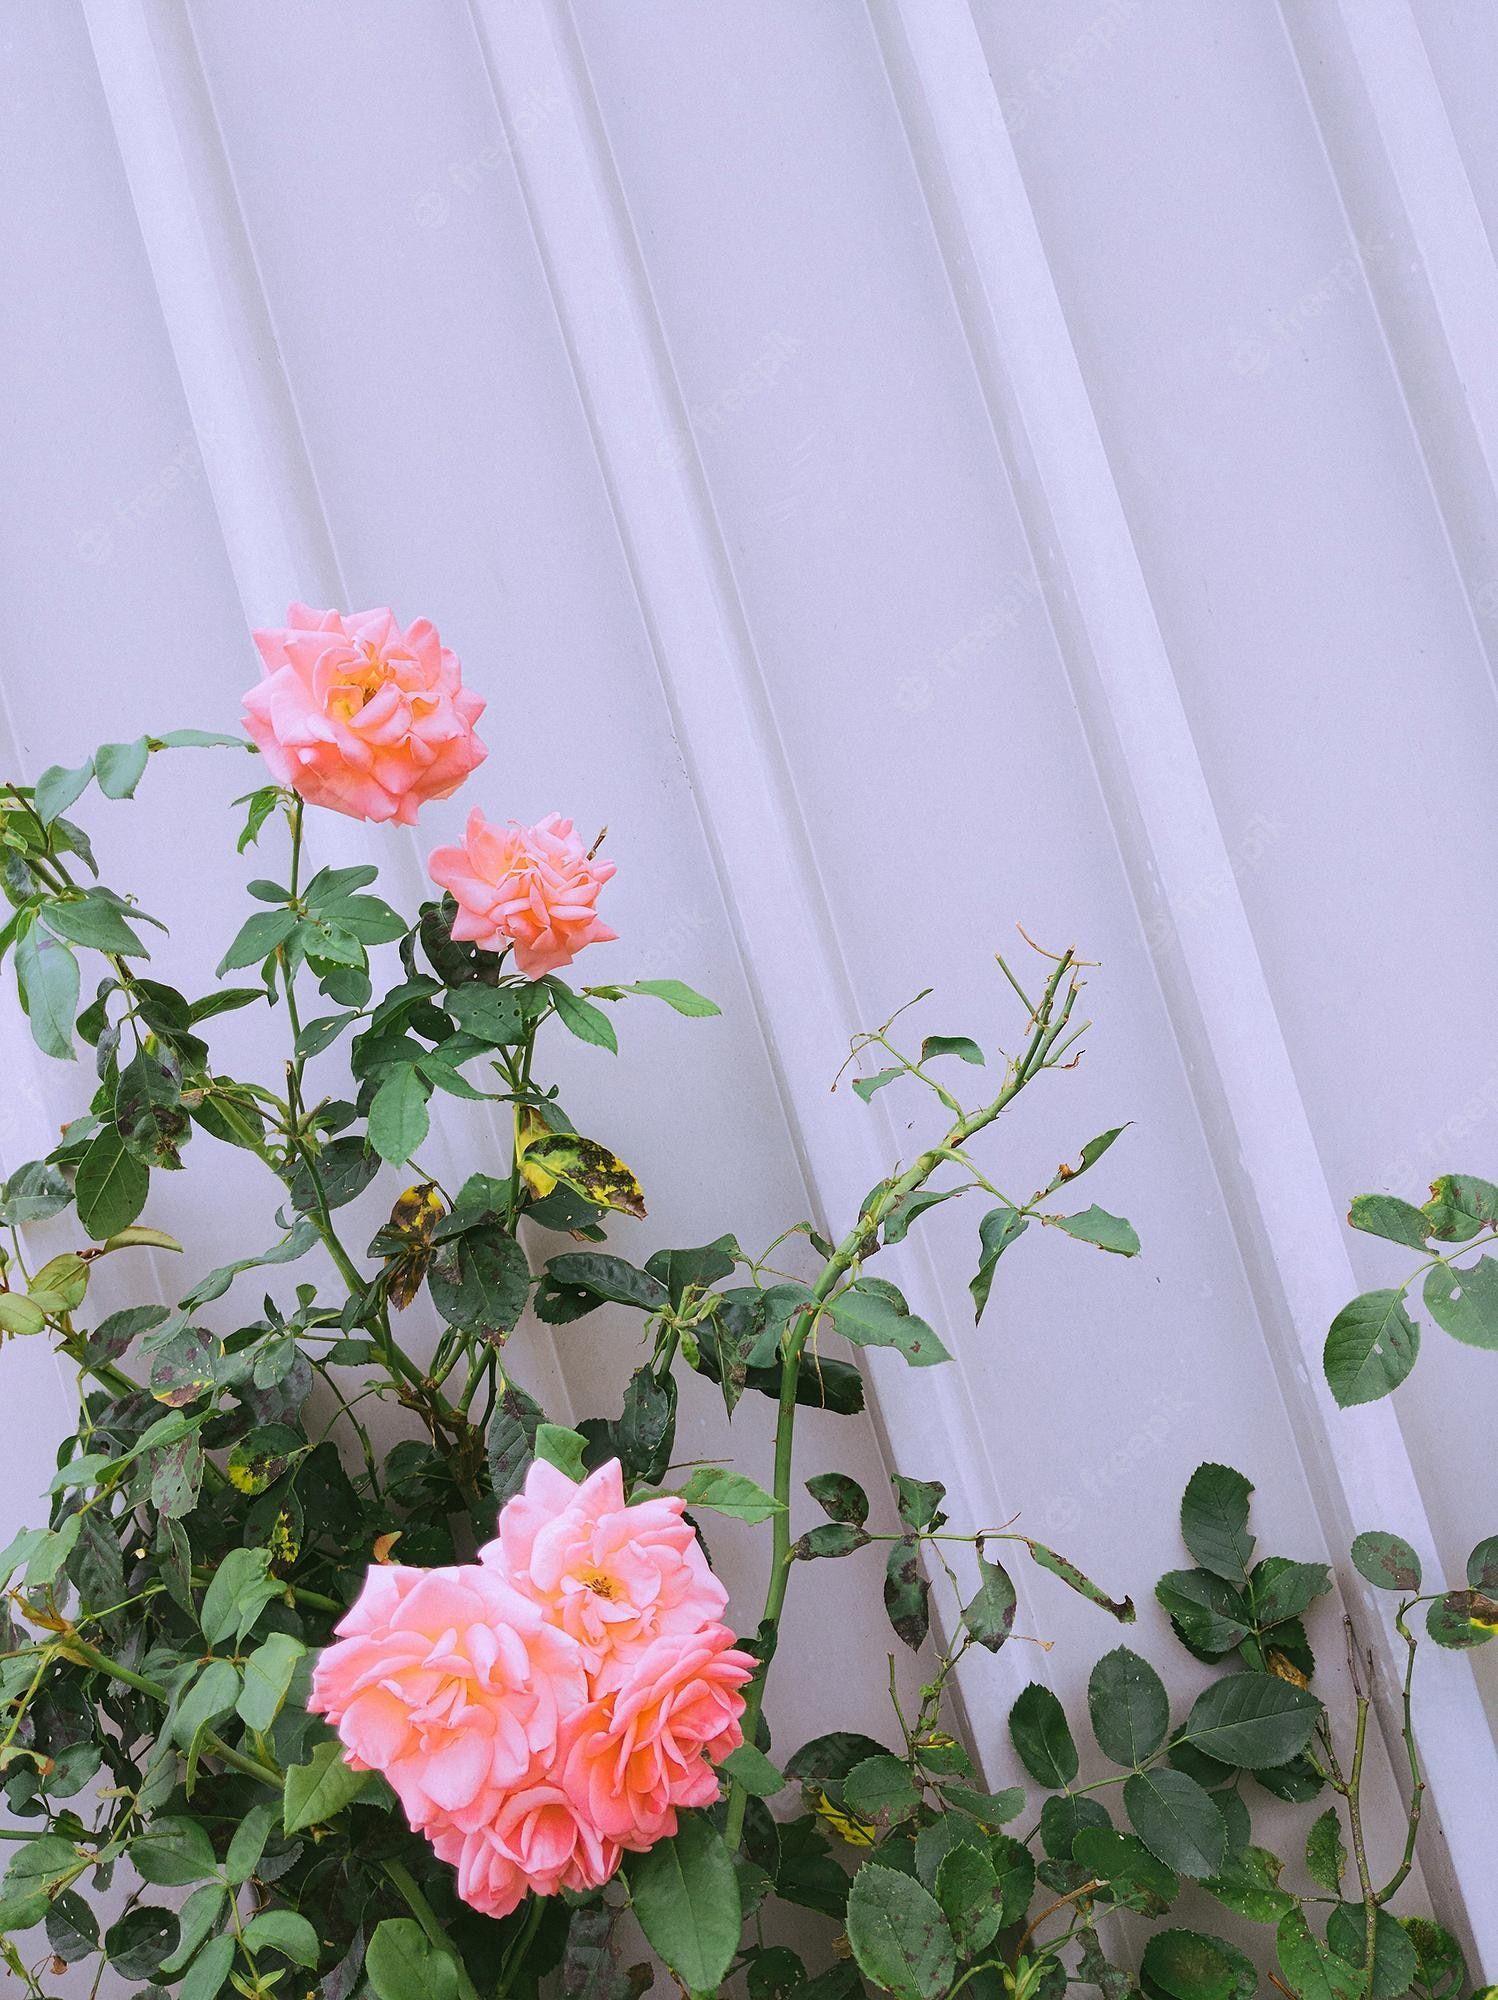  Rosa Rosen Hintergrundbild 1498x2000. Stilvolle blumentapete rosen und graue wandtextur minimalistische ästhetik